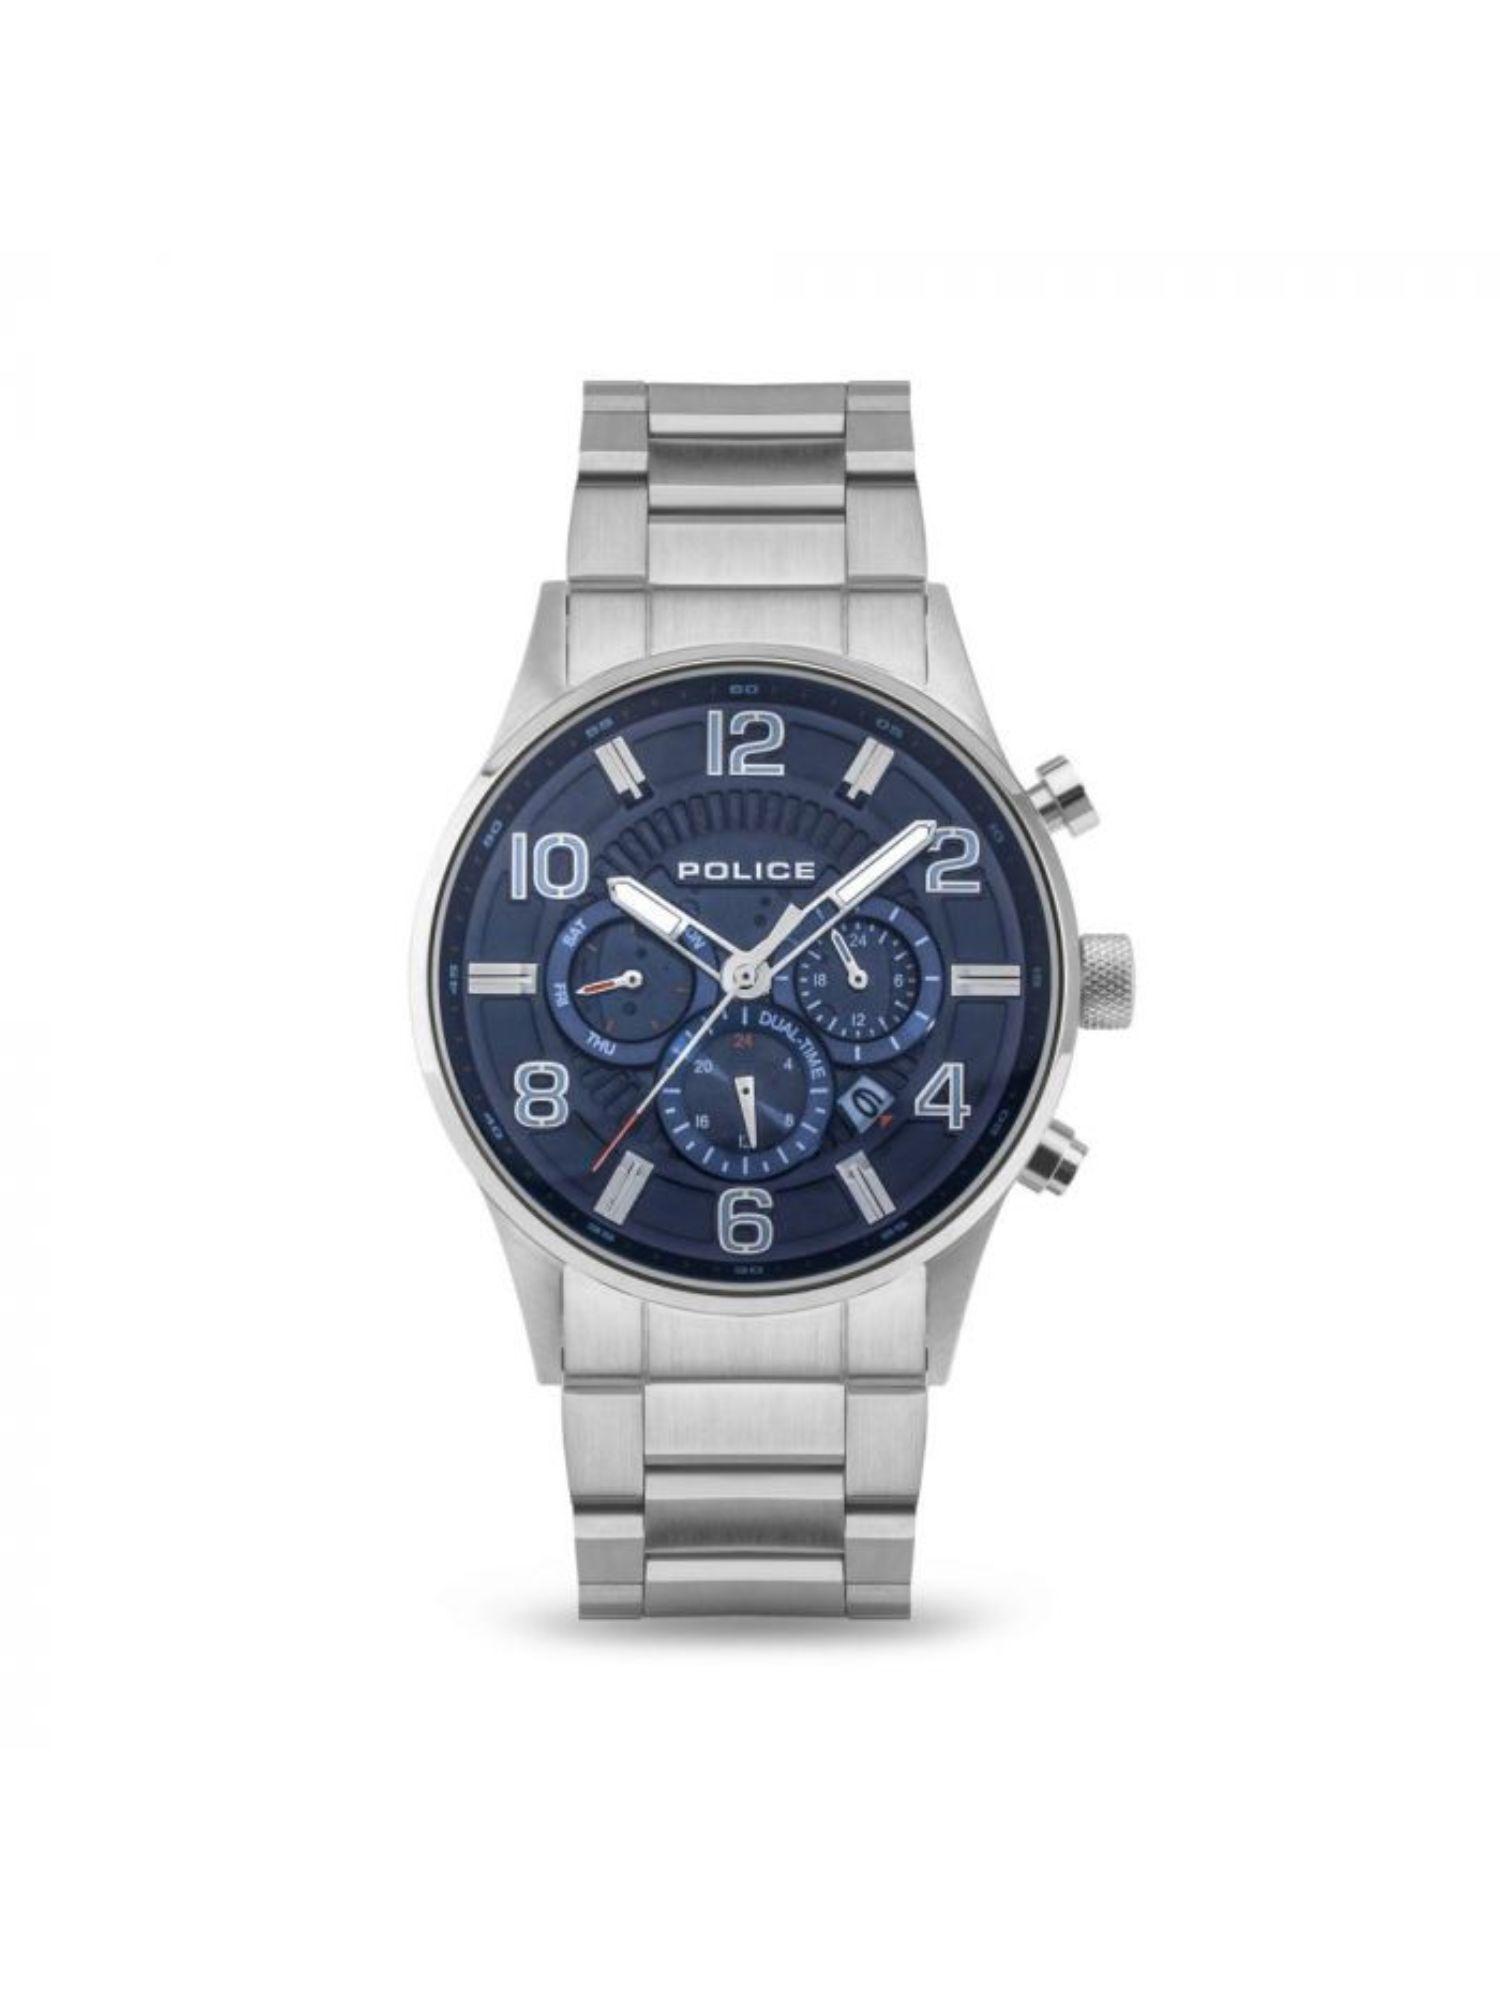 round dial analog watch for men - plpewjk2203101